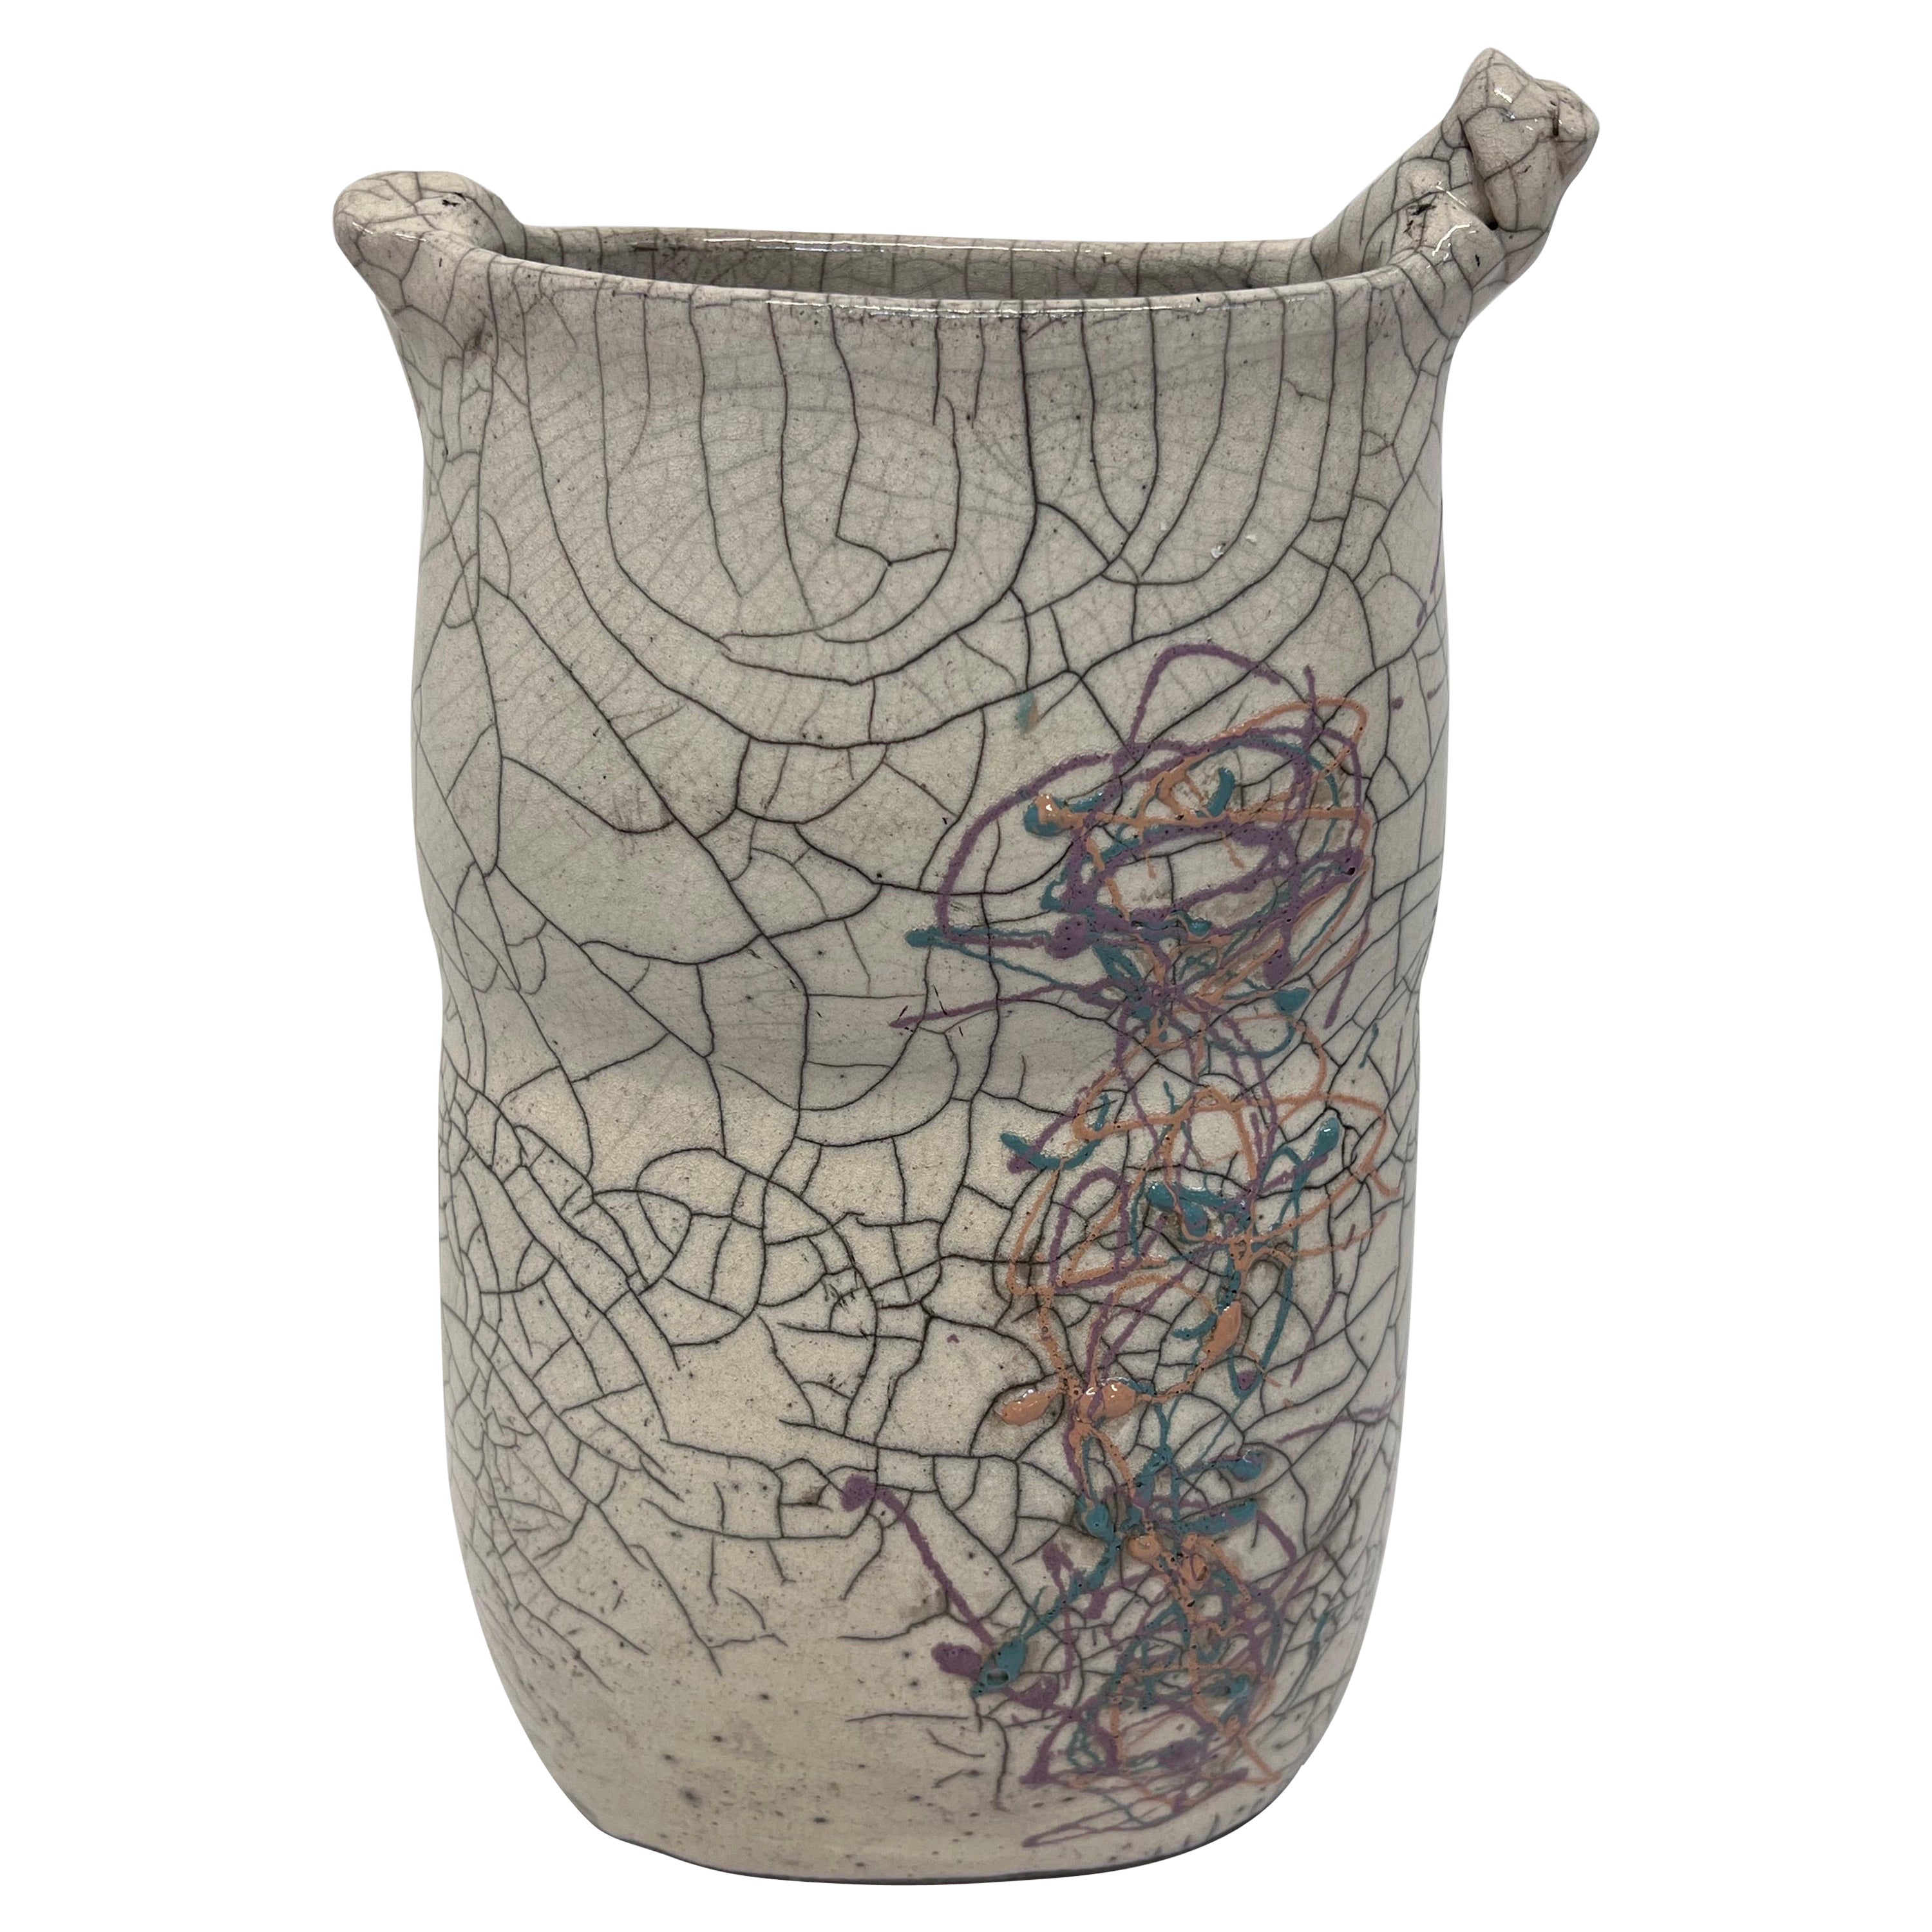 Postmoderne Craquelé-Glasur Studio Pottery-Vase mit buntem Design, 1980er Jahre